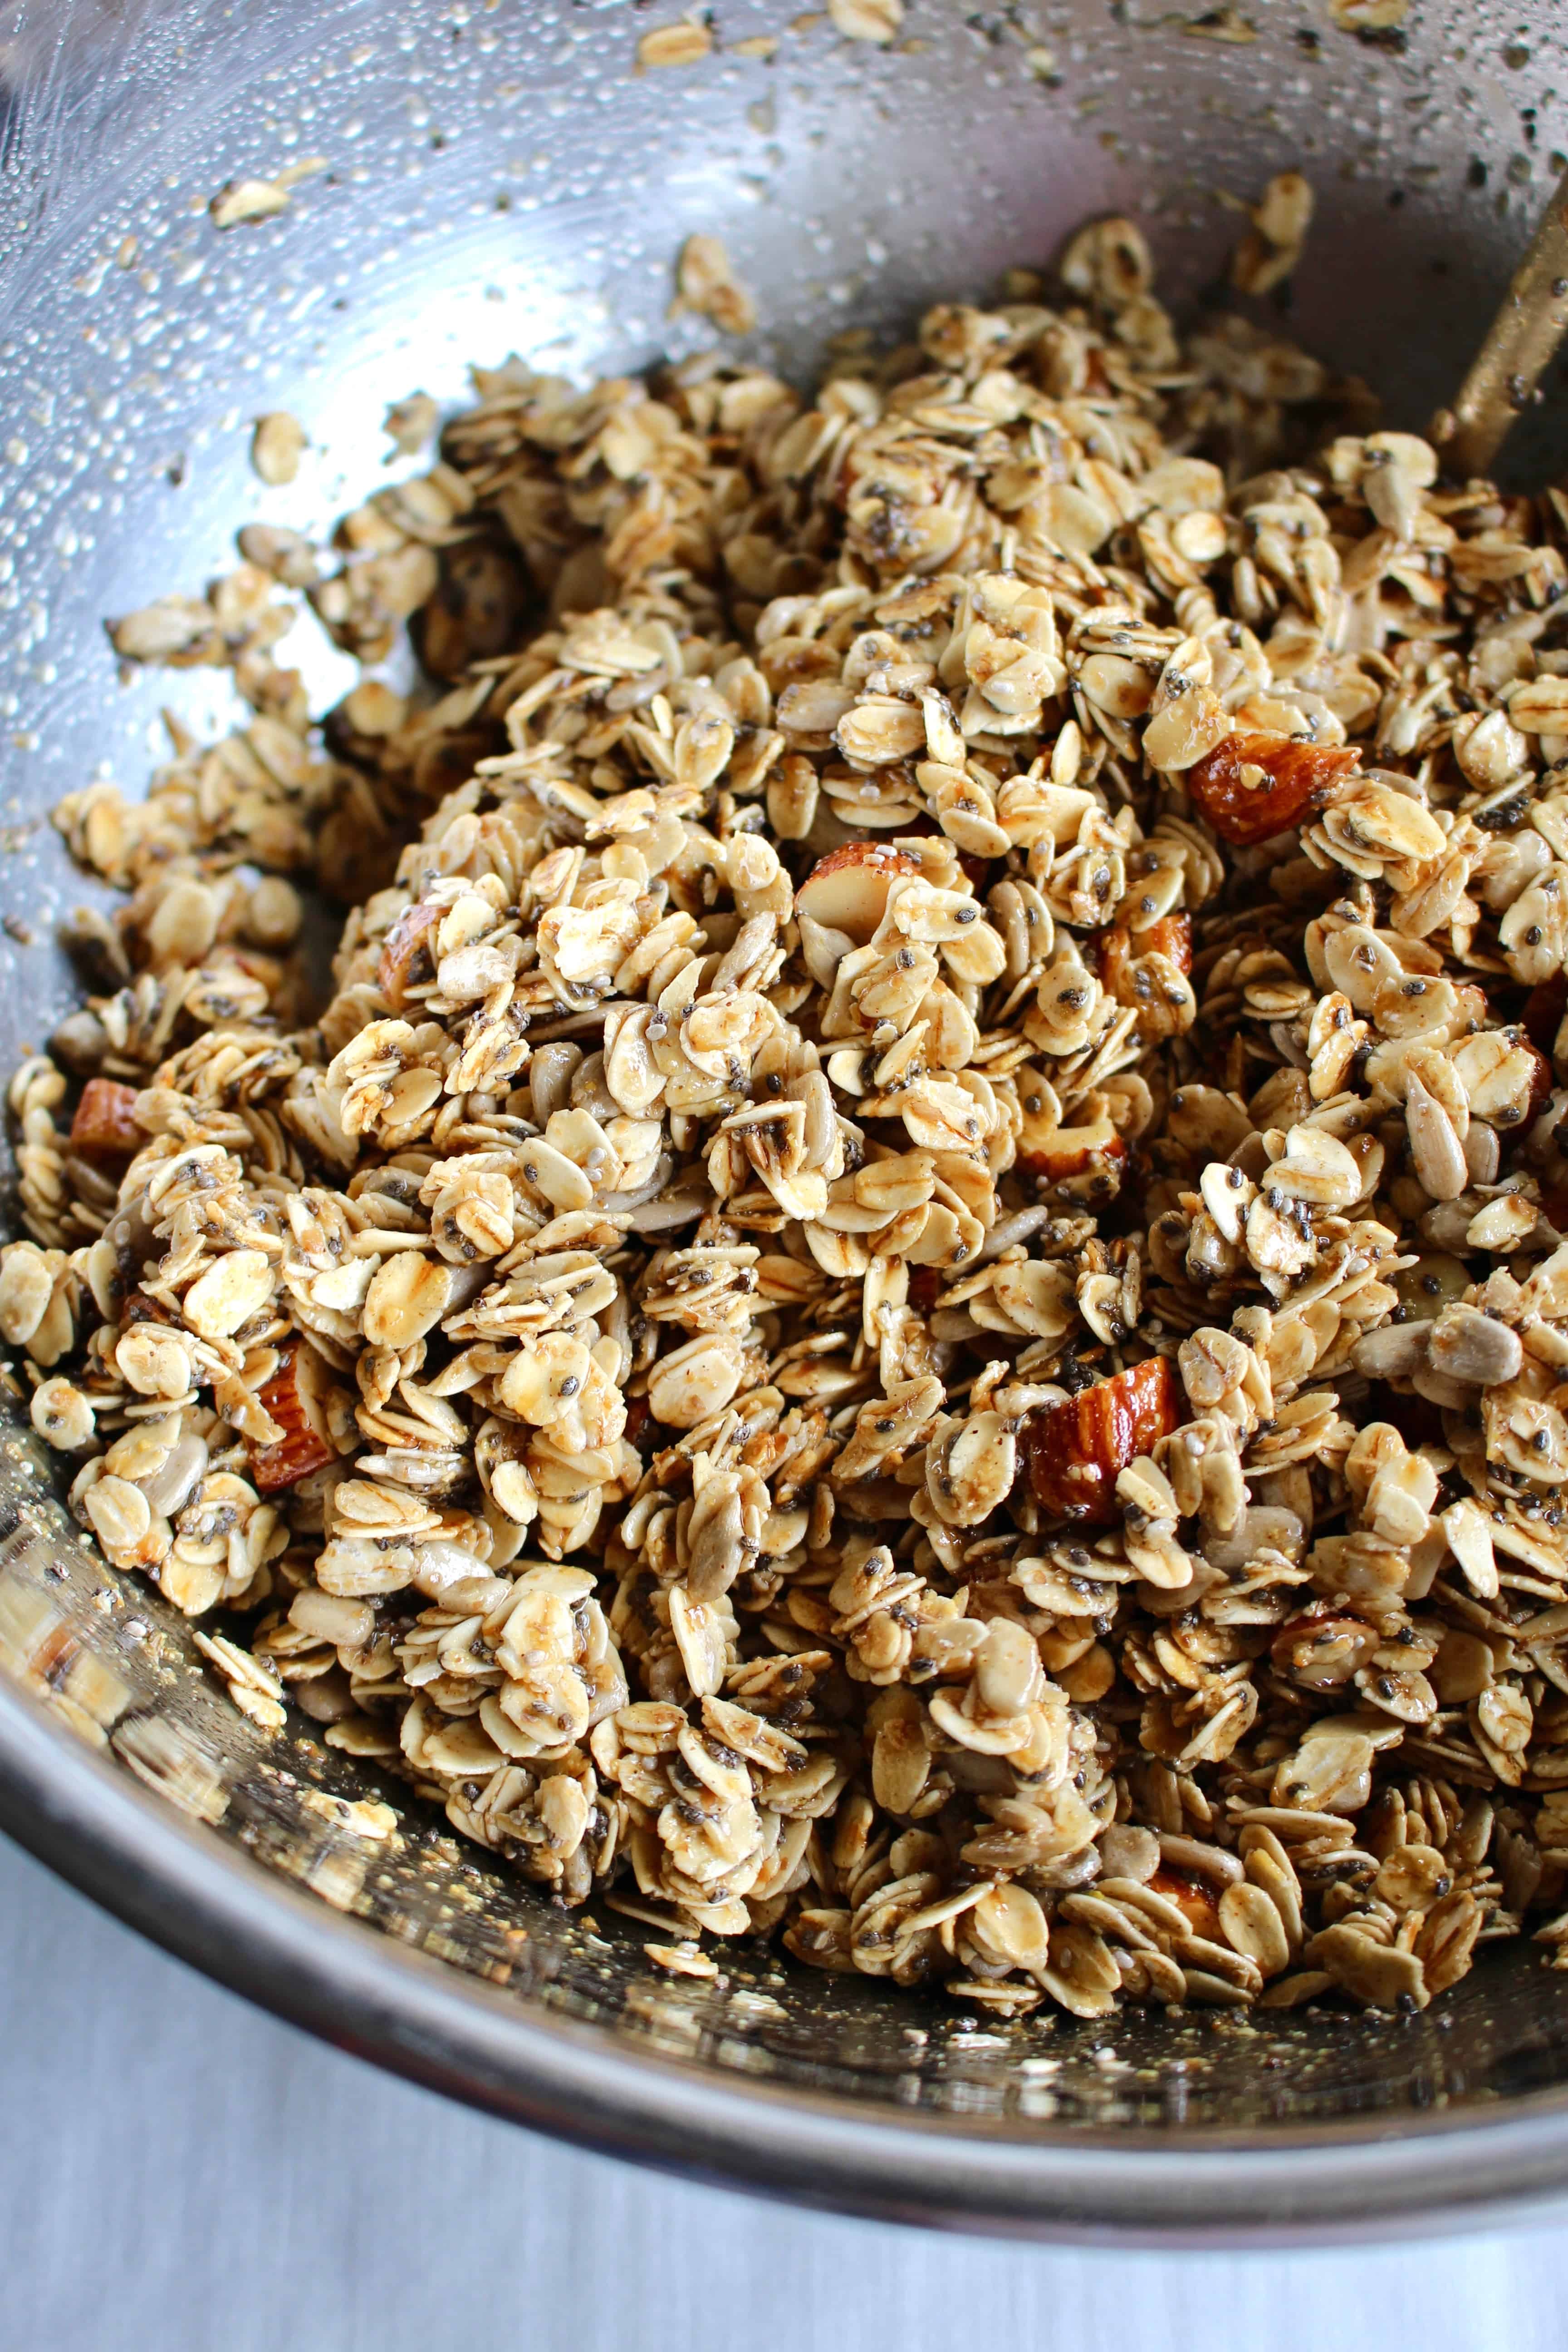 Gluten-free granola ingredients mixed in a metal bowl.